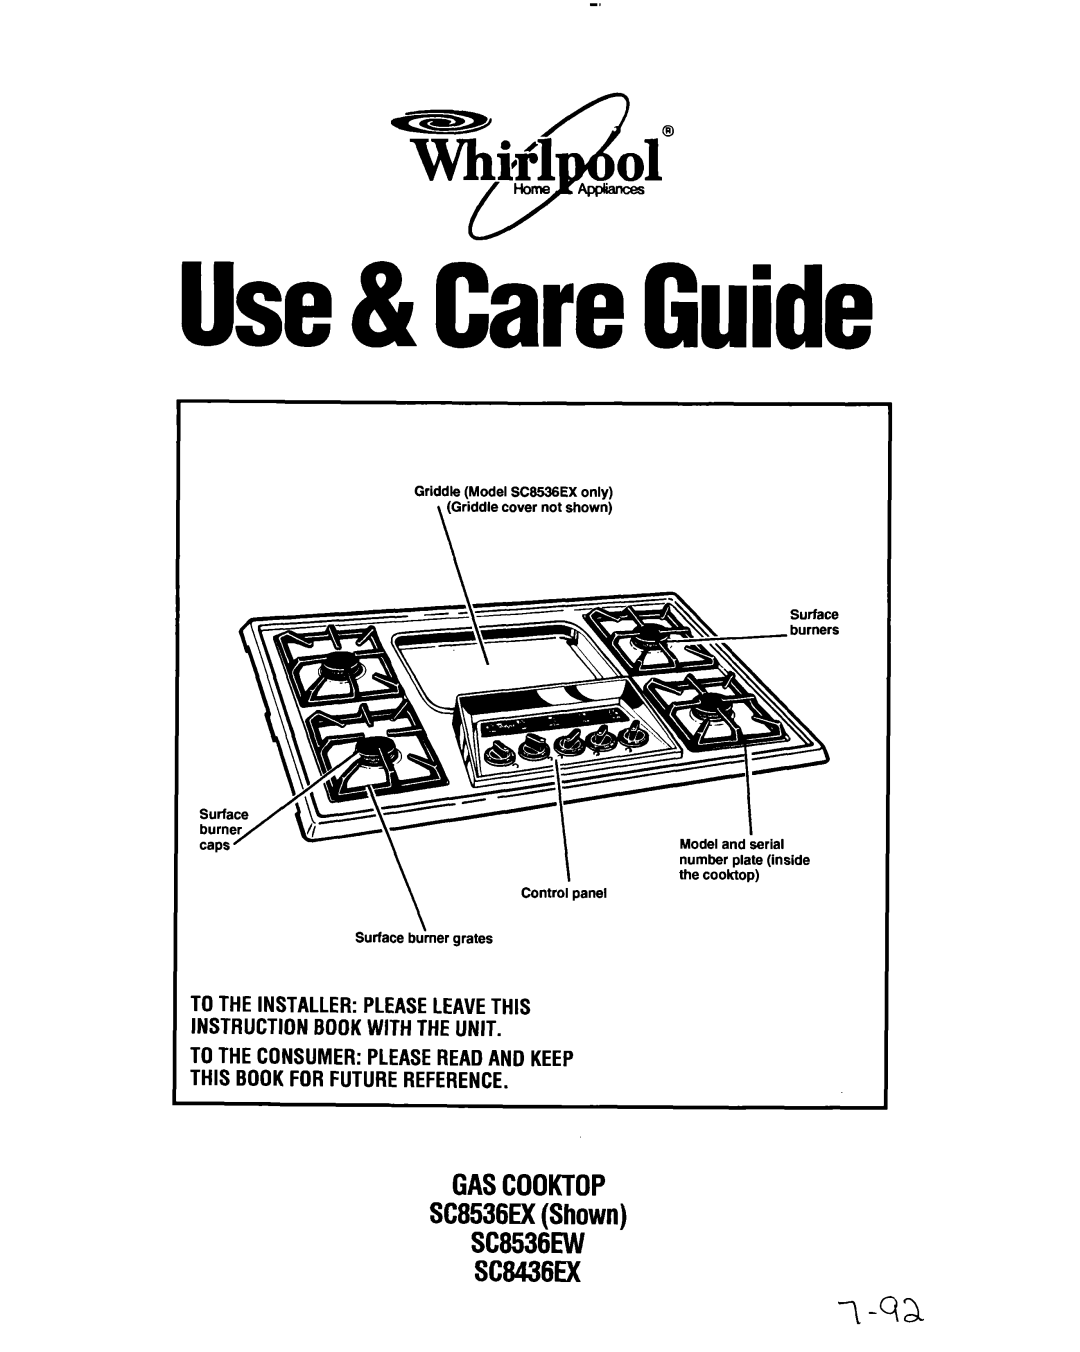 Whirlpool manual GASCOOKTOP SC8536EXShown SC6536W SC8436EX, Use& CareGuide 